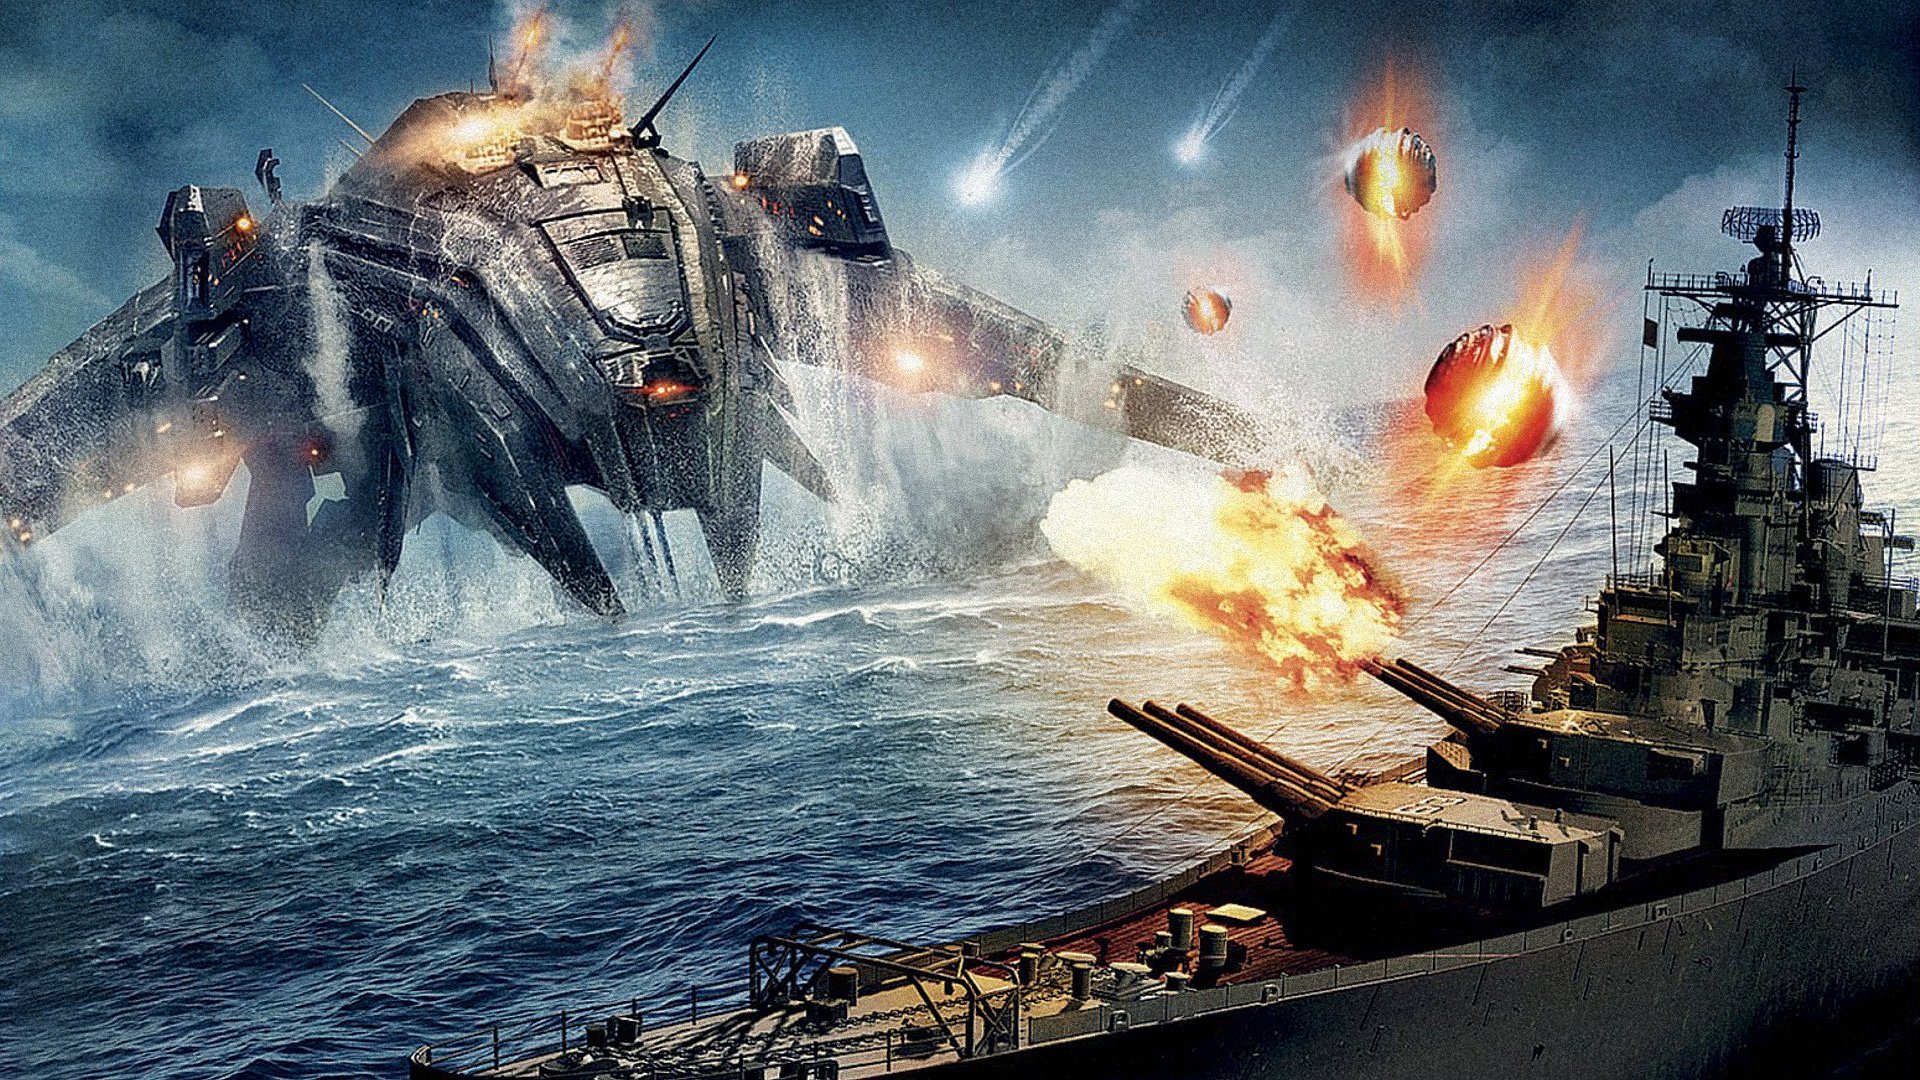 Free download Battleship wallpaper ID:438978 1080p for desktop